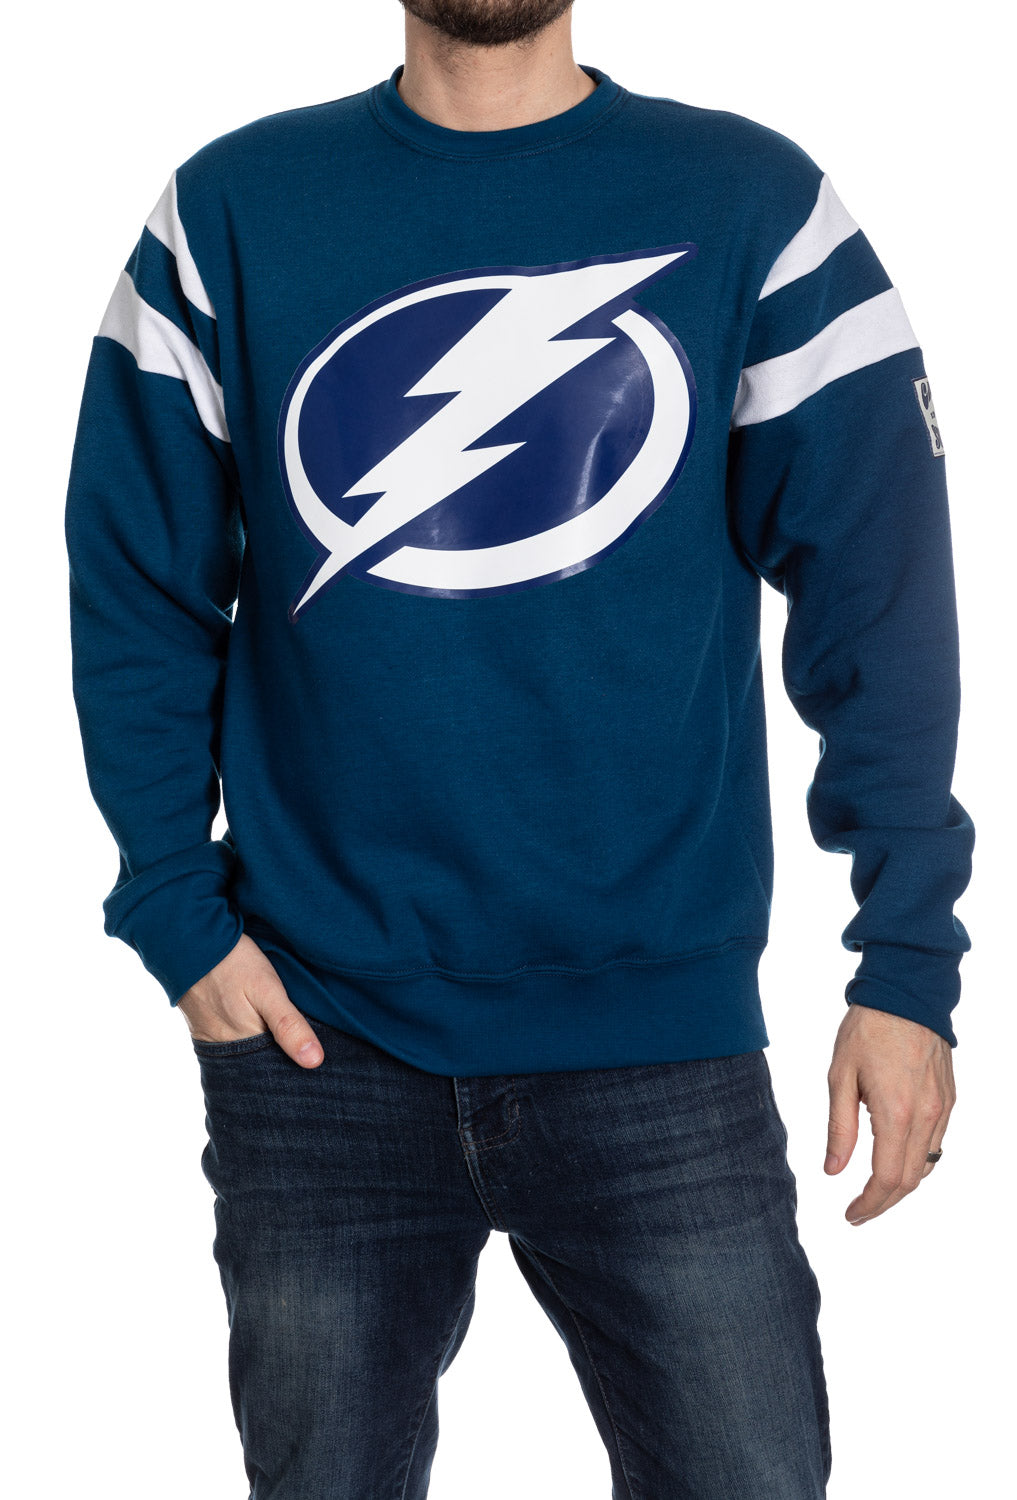 Tampa Bay Lightning Varsity Retro Style Crewneck Sweatshirt